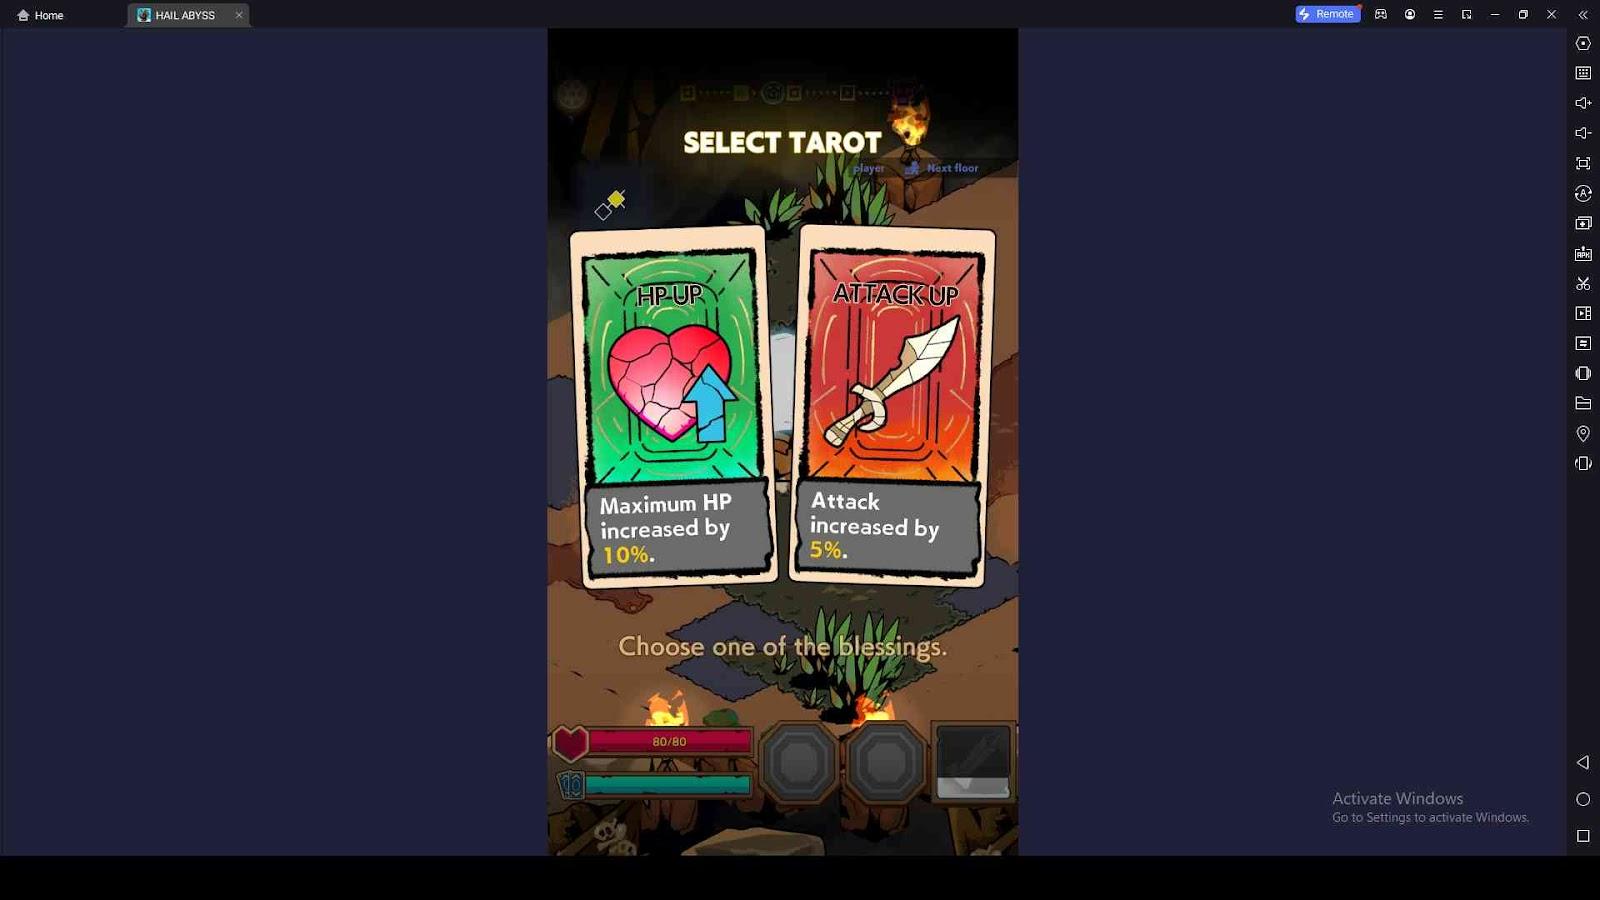 Beat More Enemies for Tarot Cards